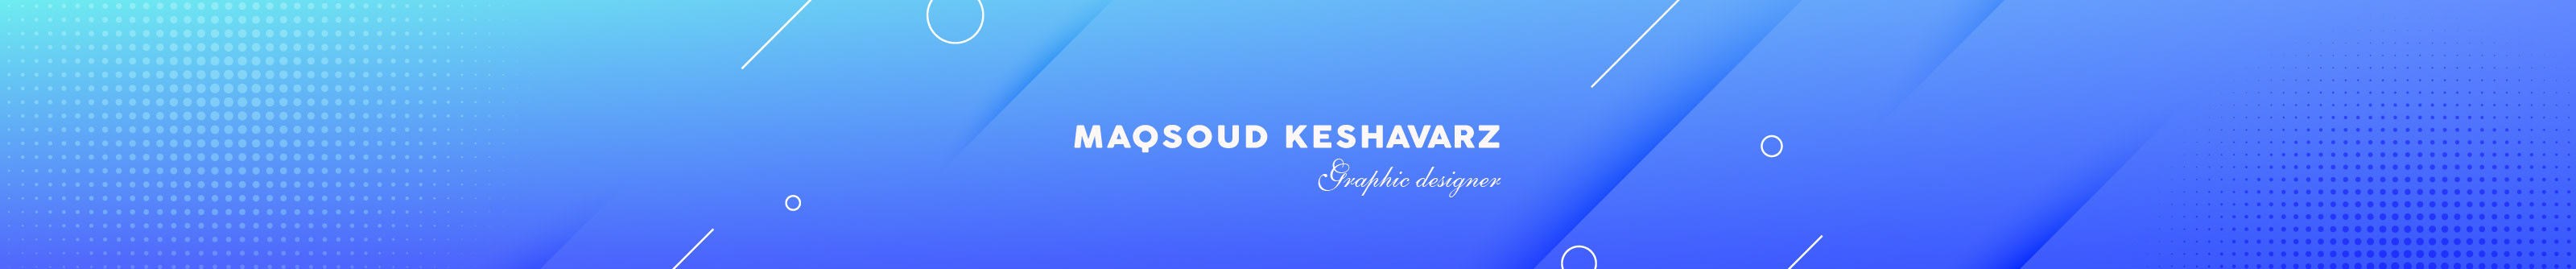 Баннер профиля Maqsoud Keshavarz